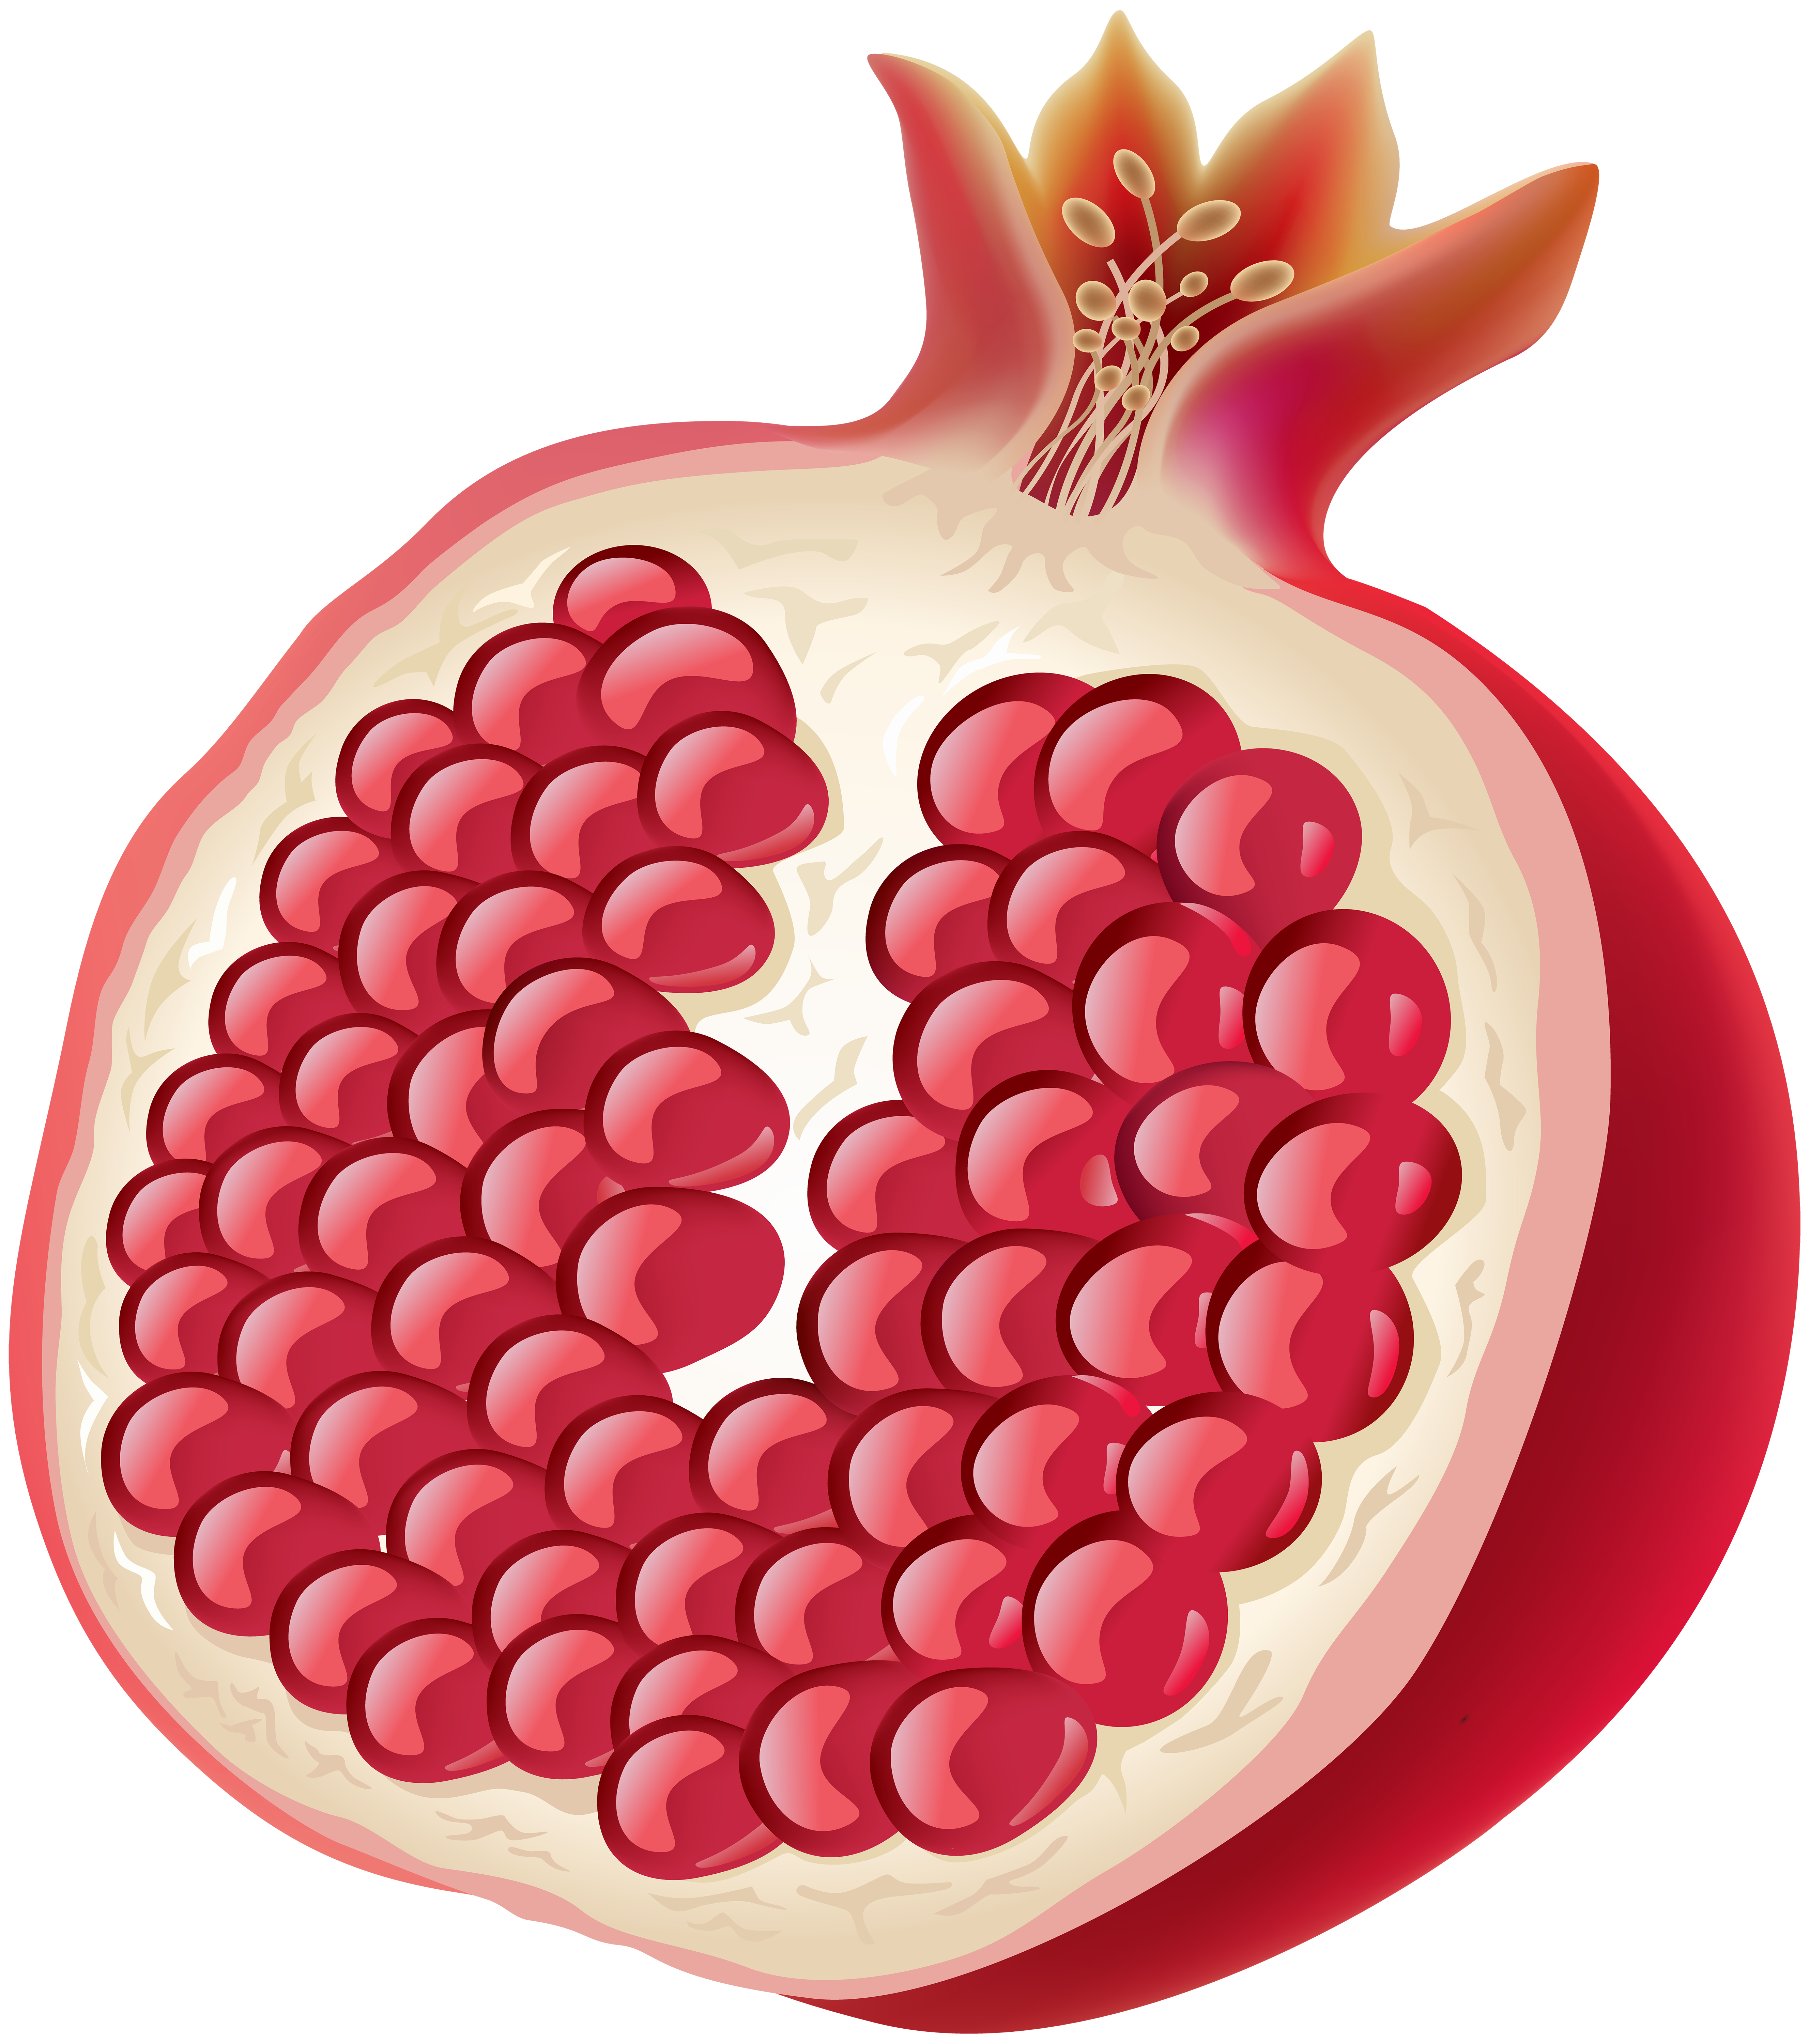 pomegranate clipart